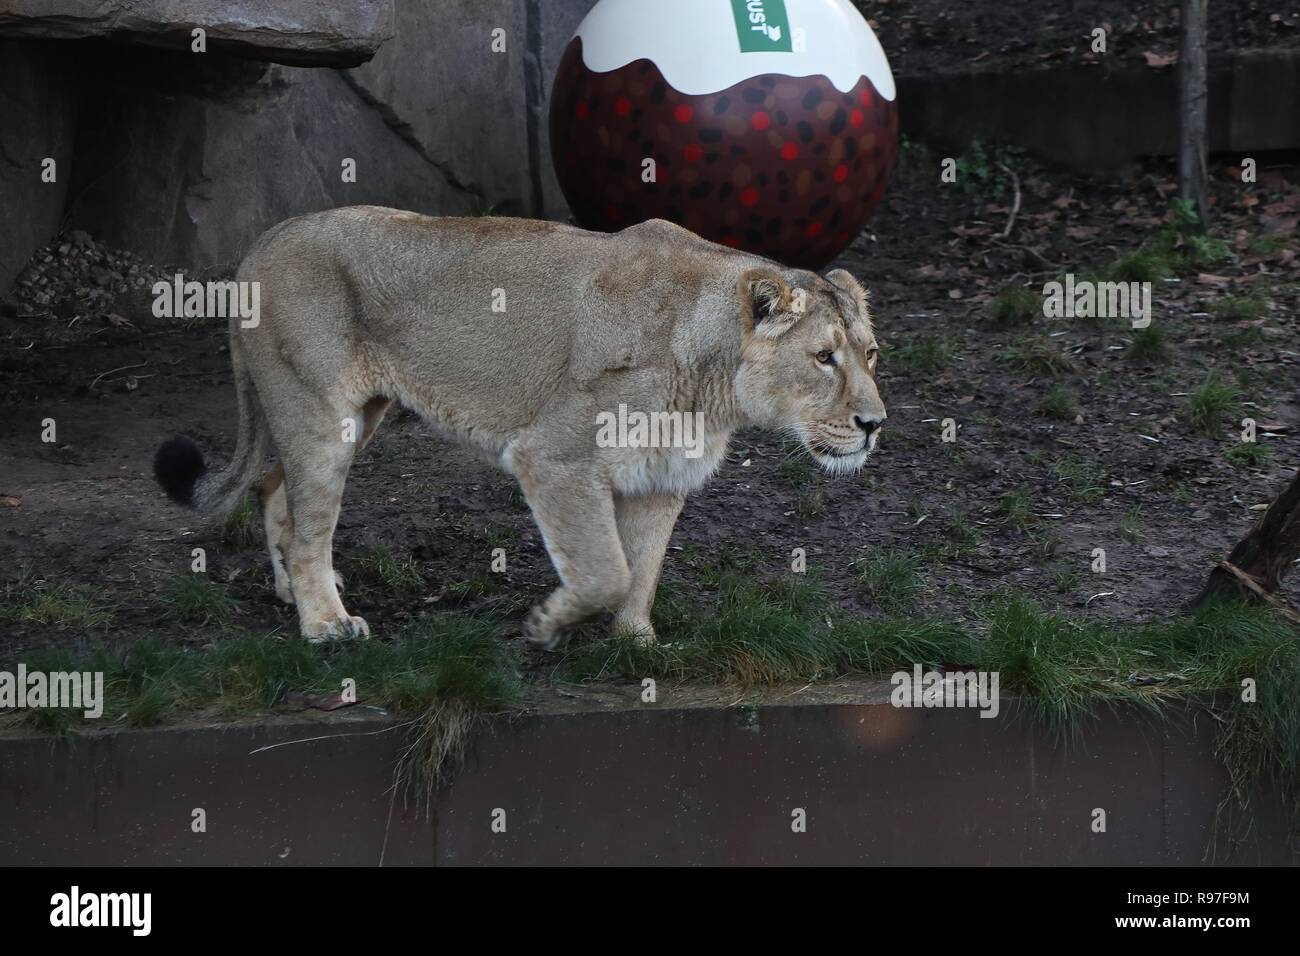 Animal adventures at ZSL London Zoo 20 December 2018 Stock Photo - Alamy